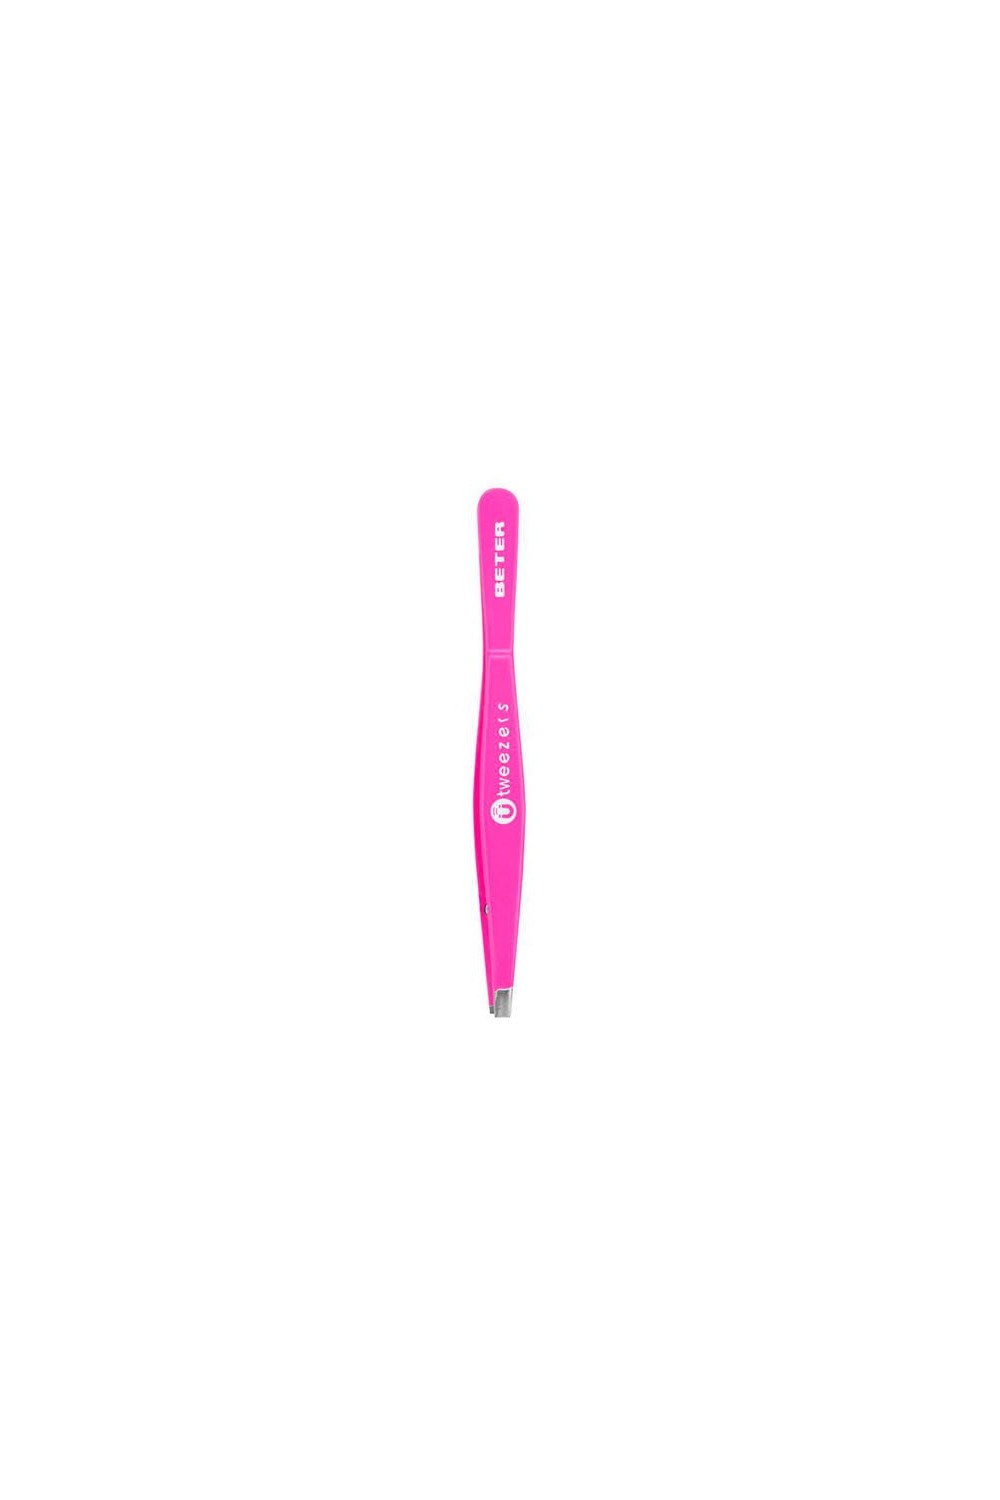 Beter Tweezers Magnetic Straight Tip Pink